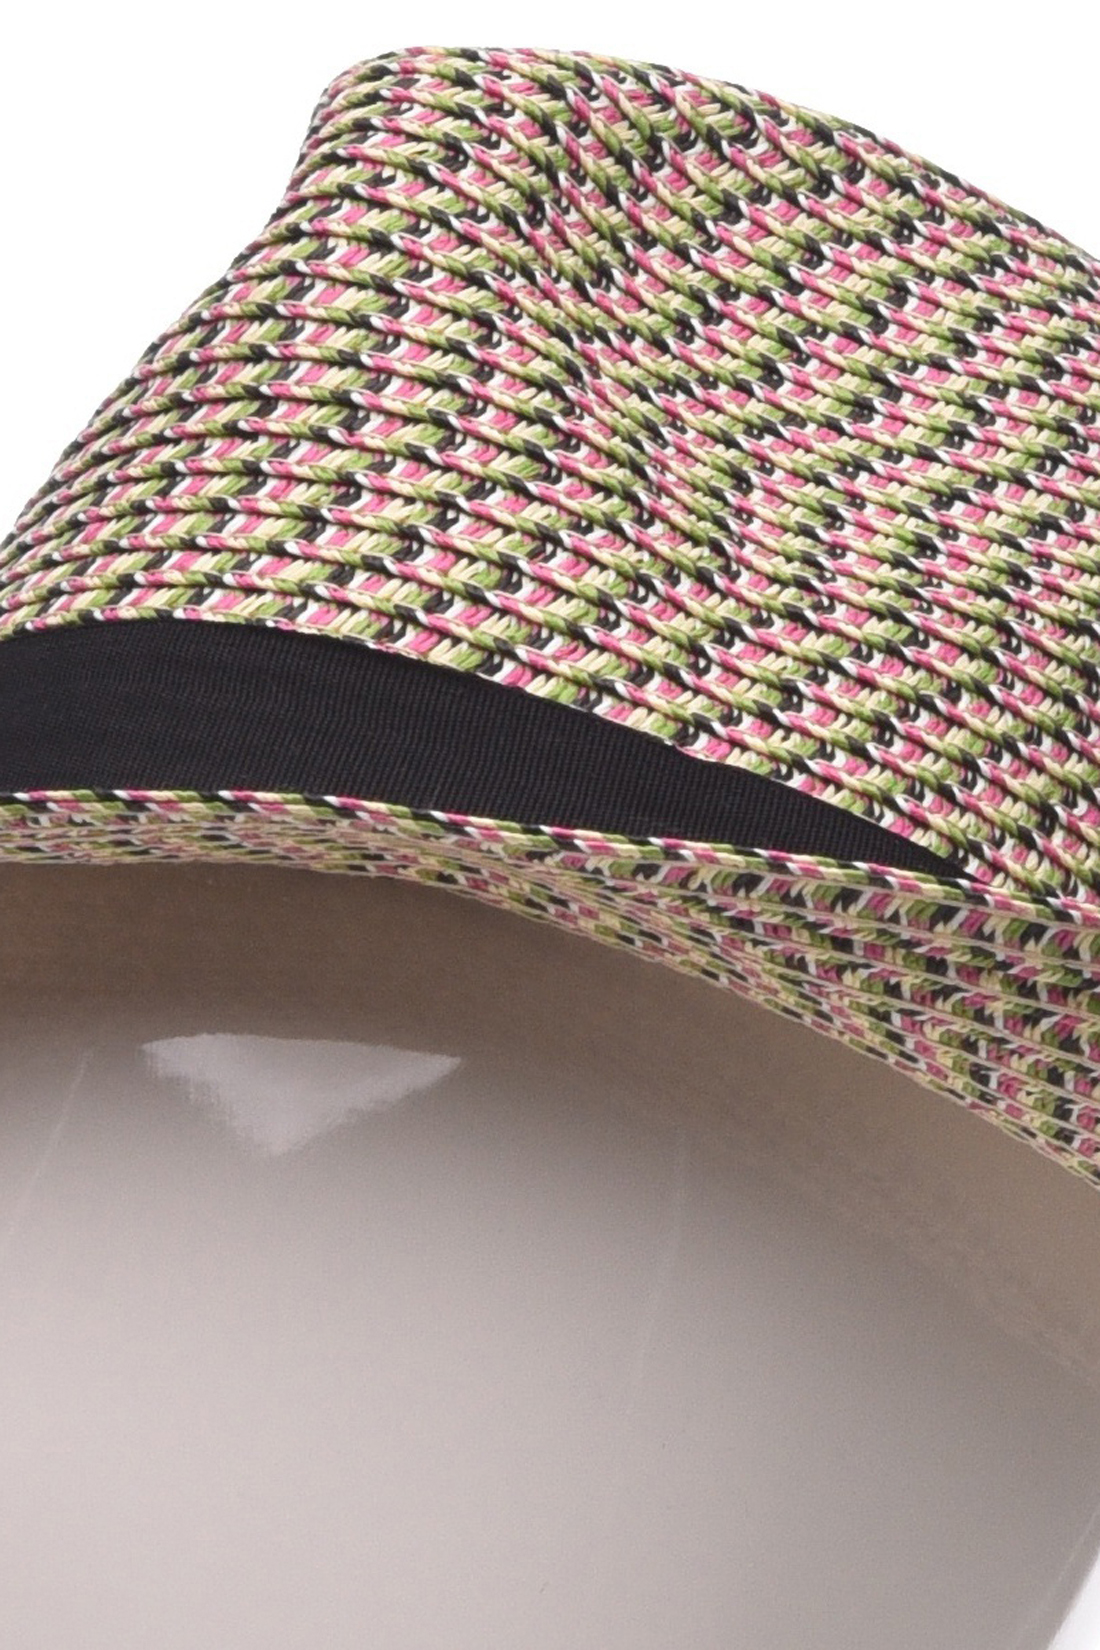 Шляпа с разноцветным плетением (арт. baon B849001), размер Б/р 58 Шляпа с разноцветным плетением (арт. baon B849001) - фото 7